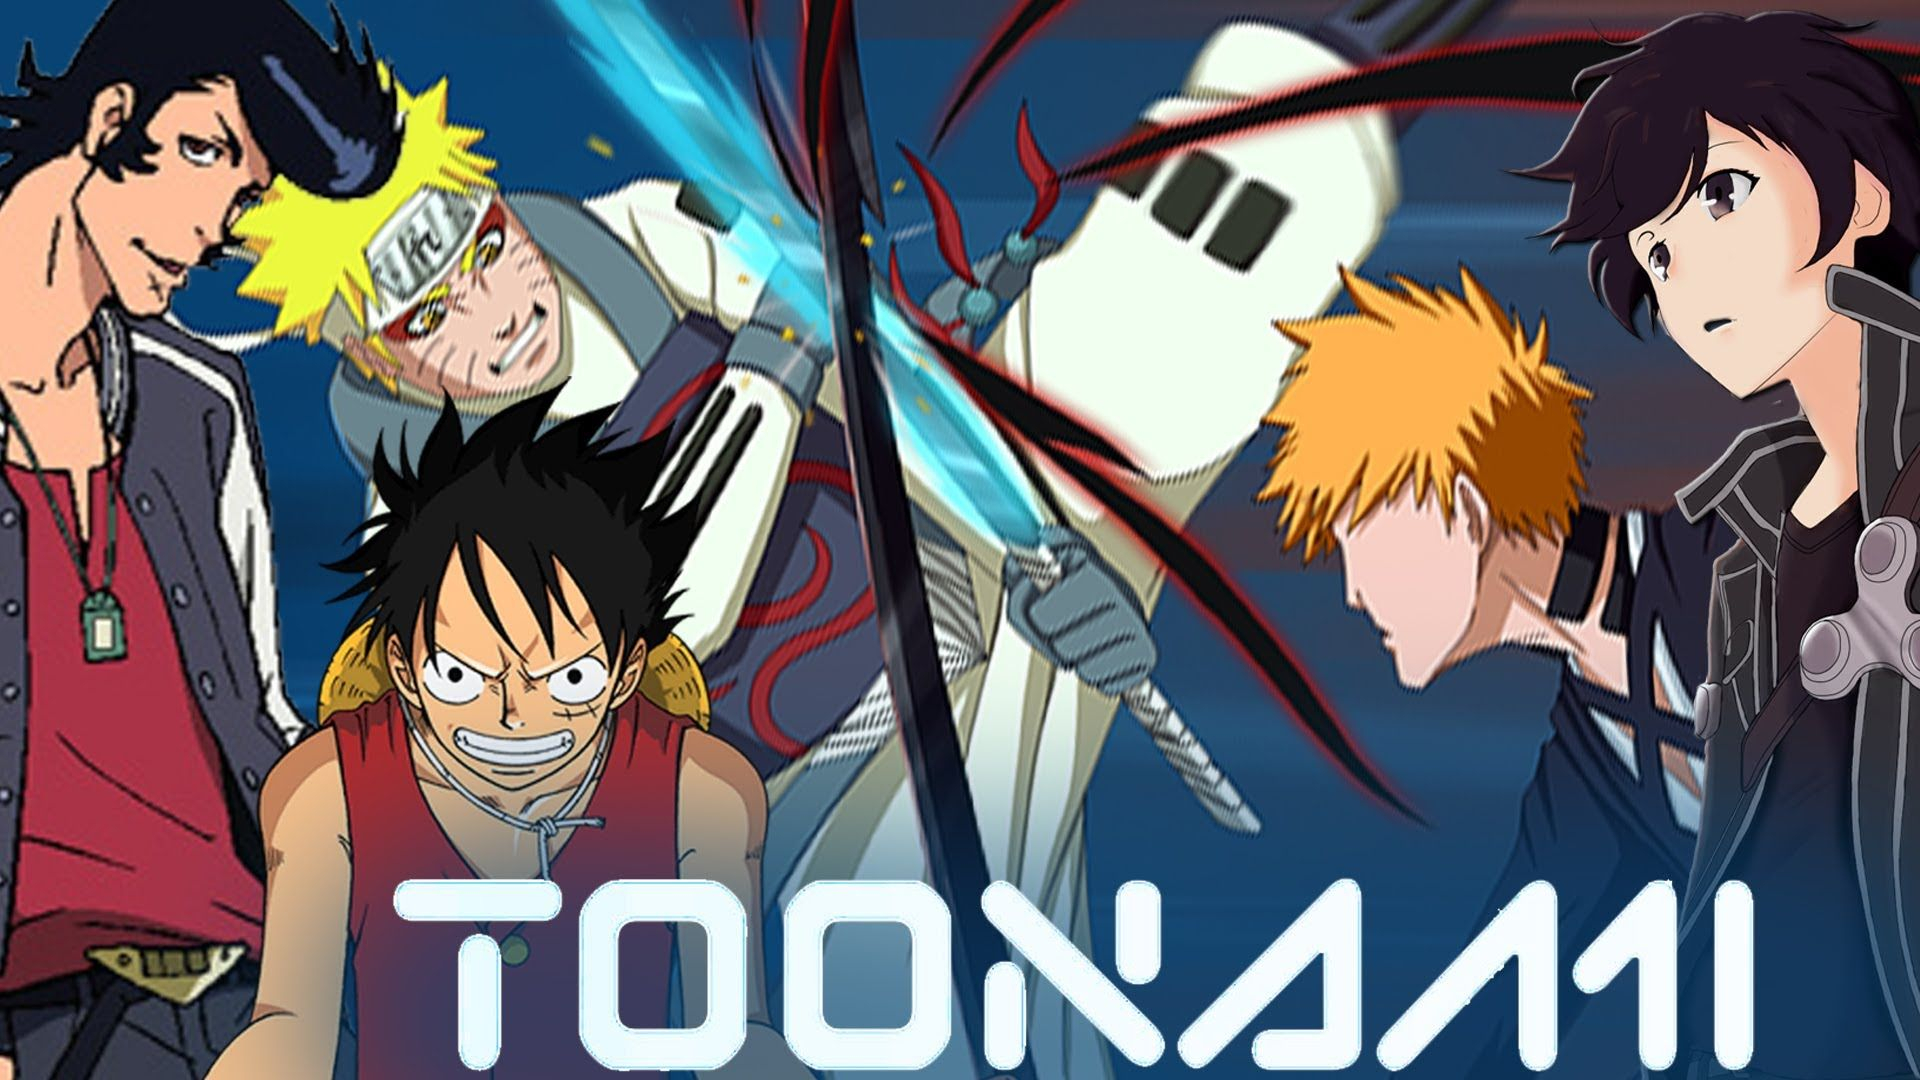 1920x1080 Toonami Anime Wallpapers Top Free Toonami Anime Backgrounds